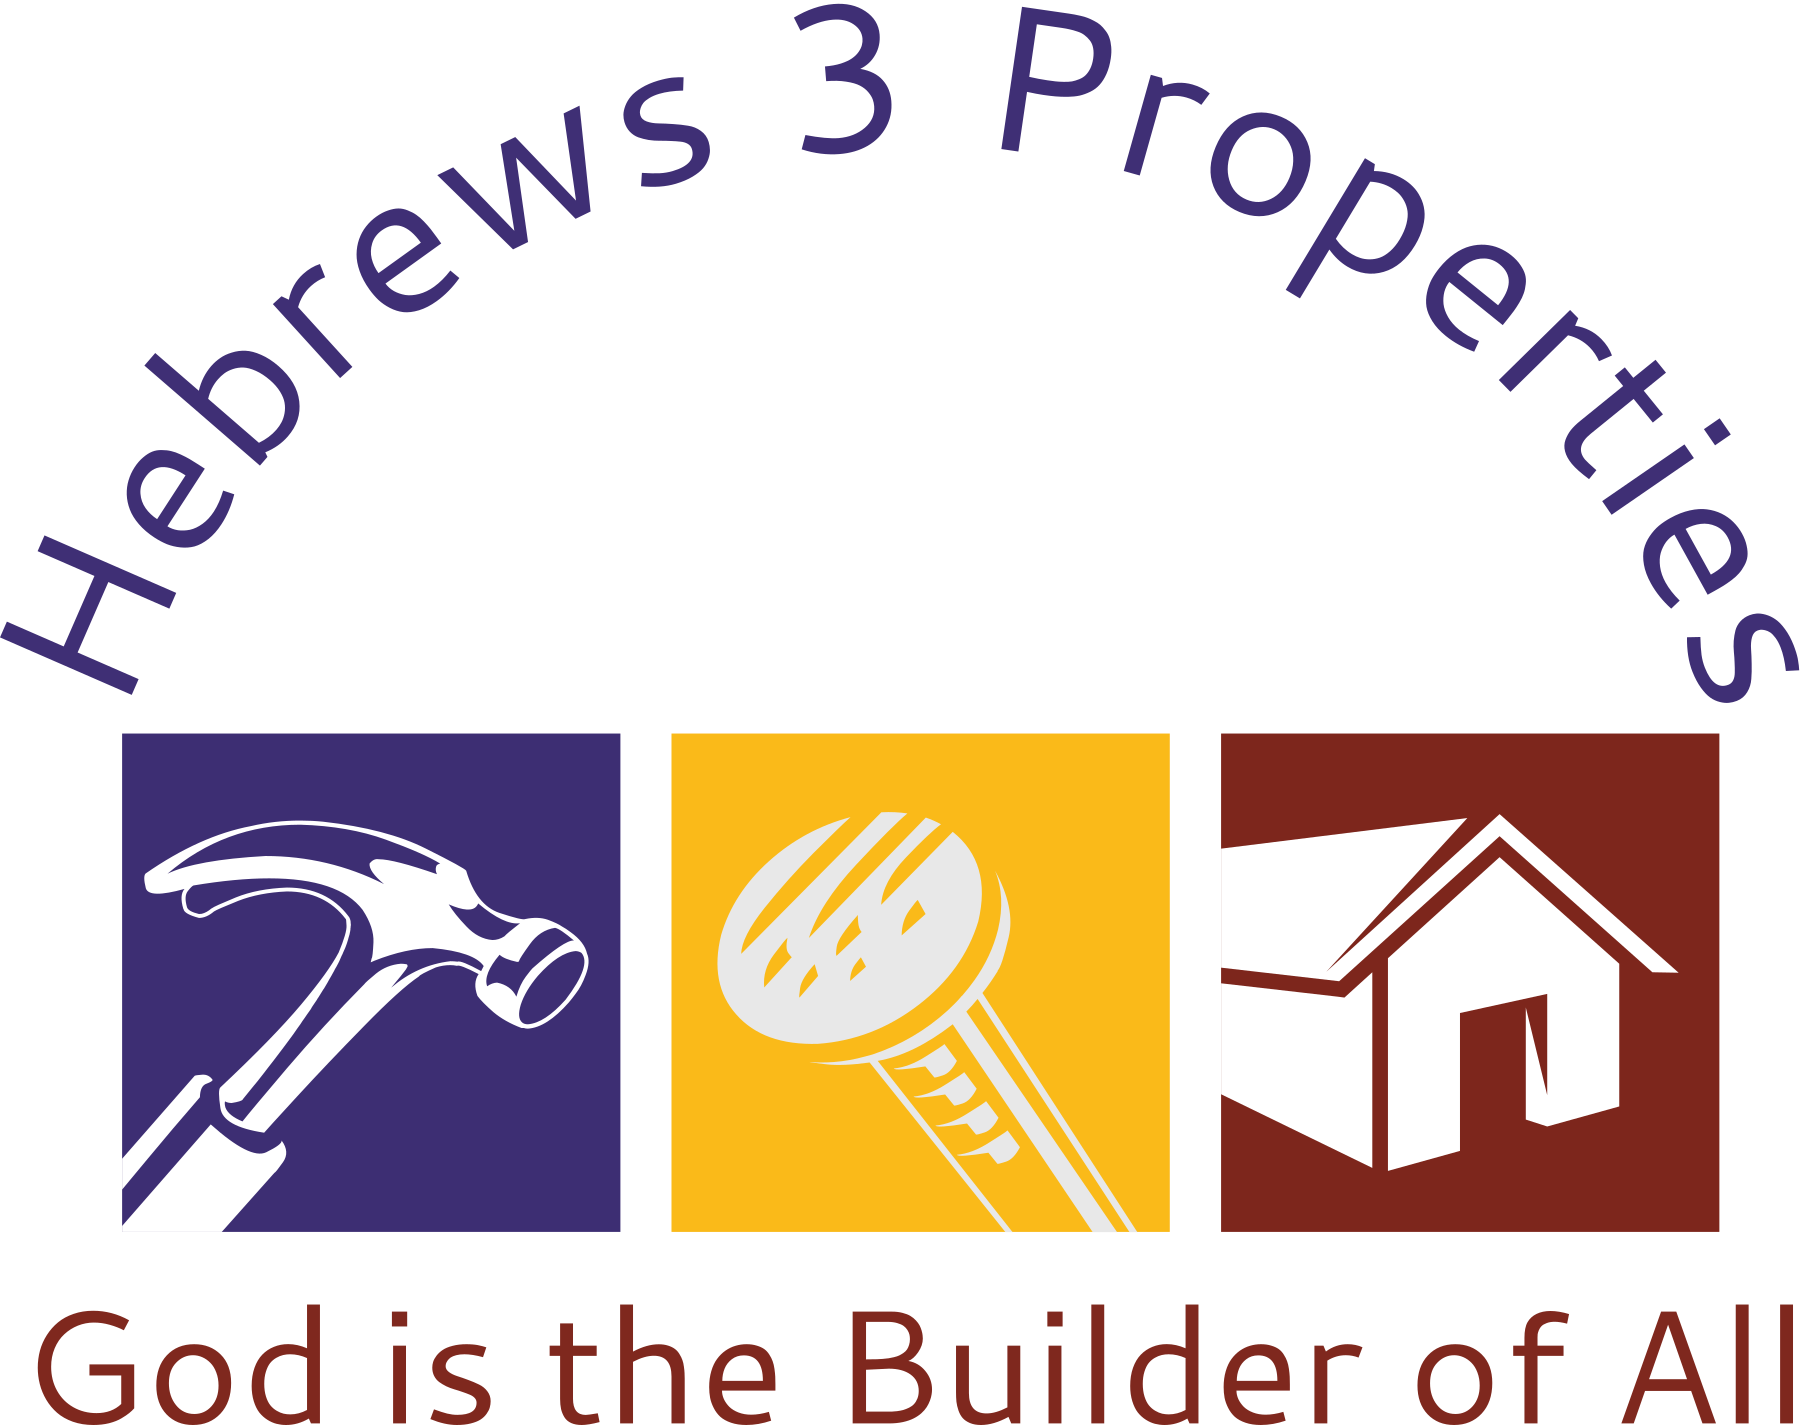 Hebrews 3 Properties, LLC